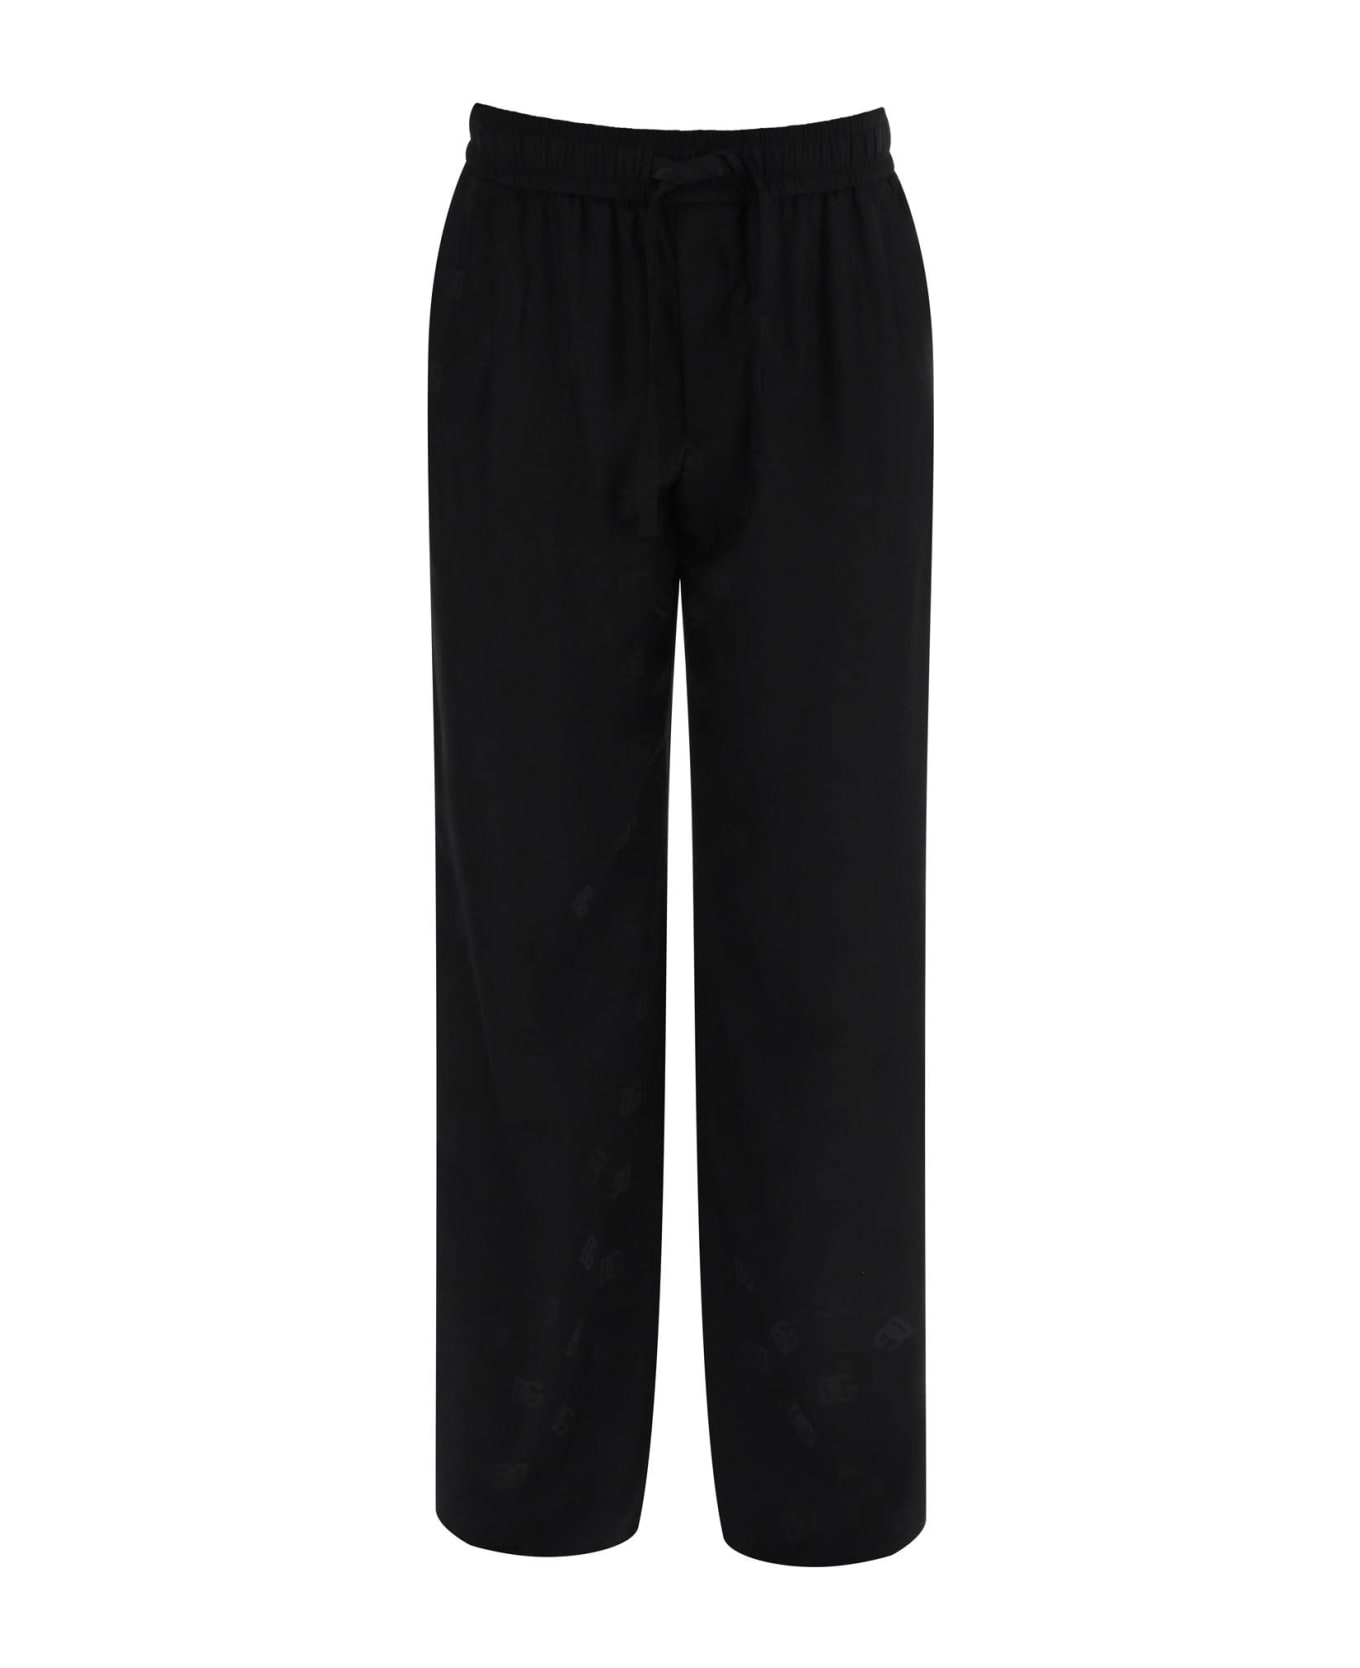 Dolce & Gabbana Dg Jacquard Pants - NERO (Black) ボトムス